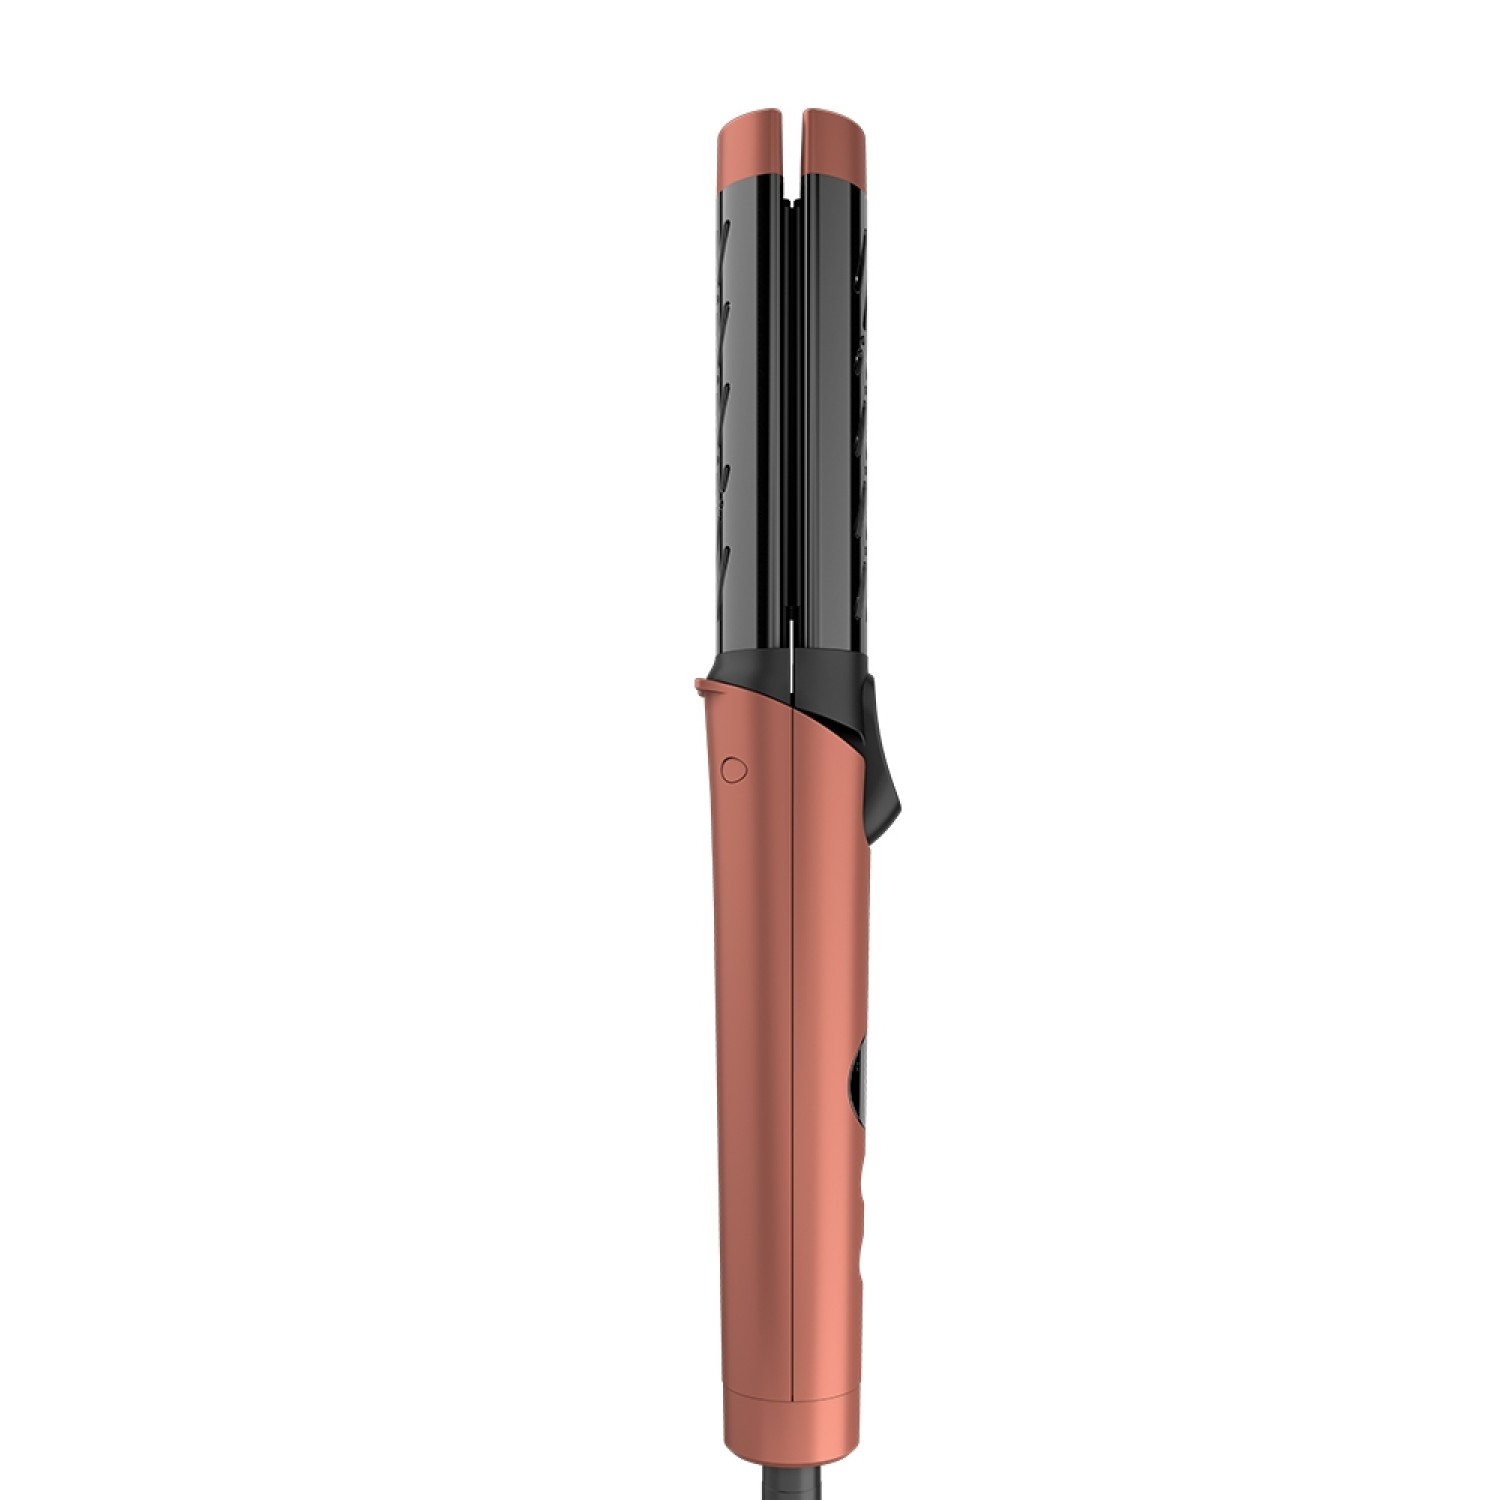 Rushbrush C1 Cool Hair Styler – Pink and black